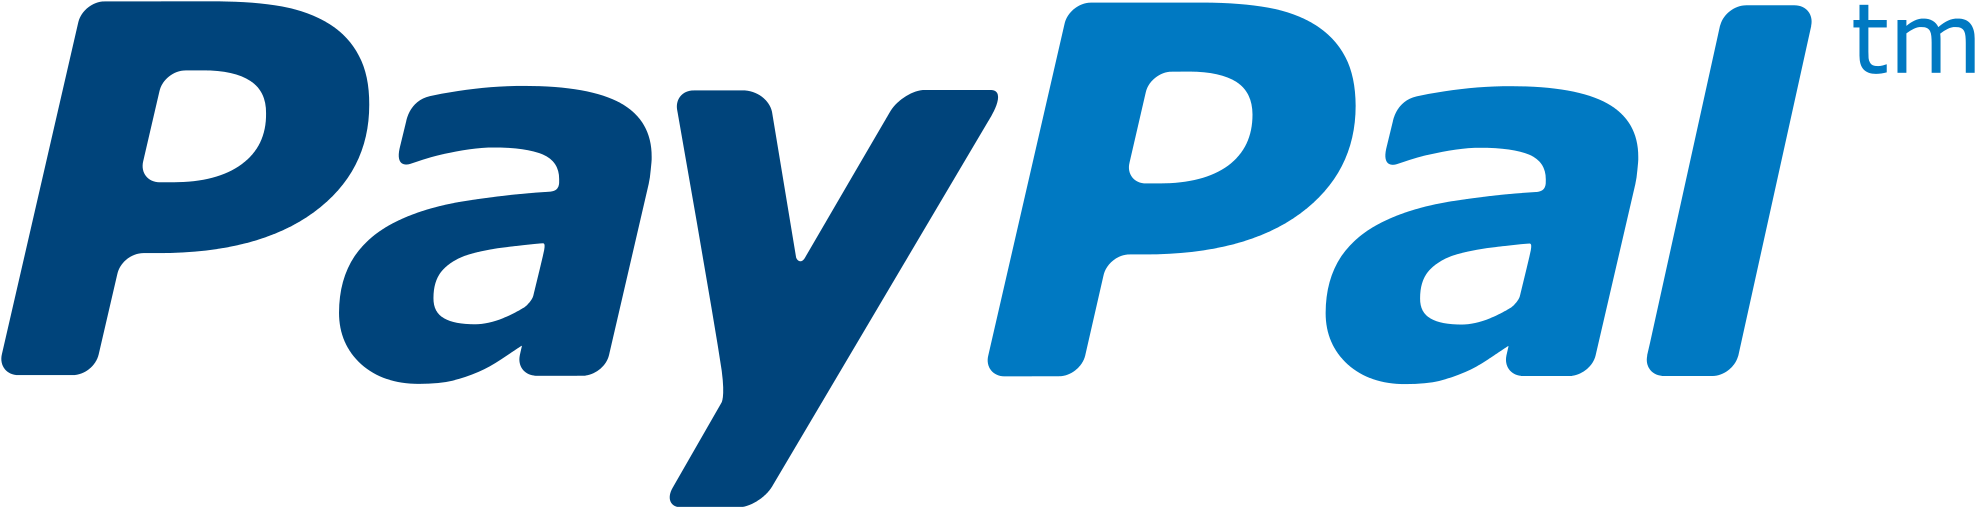 Download - Logo Pequeno Paypal Png (2272x1704), Png Download